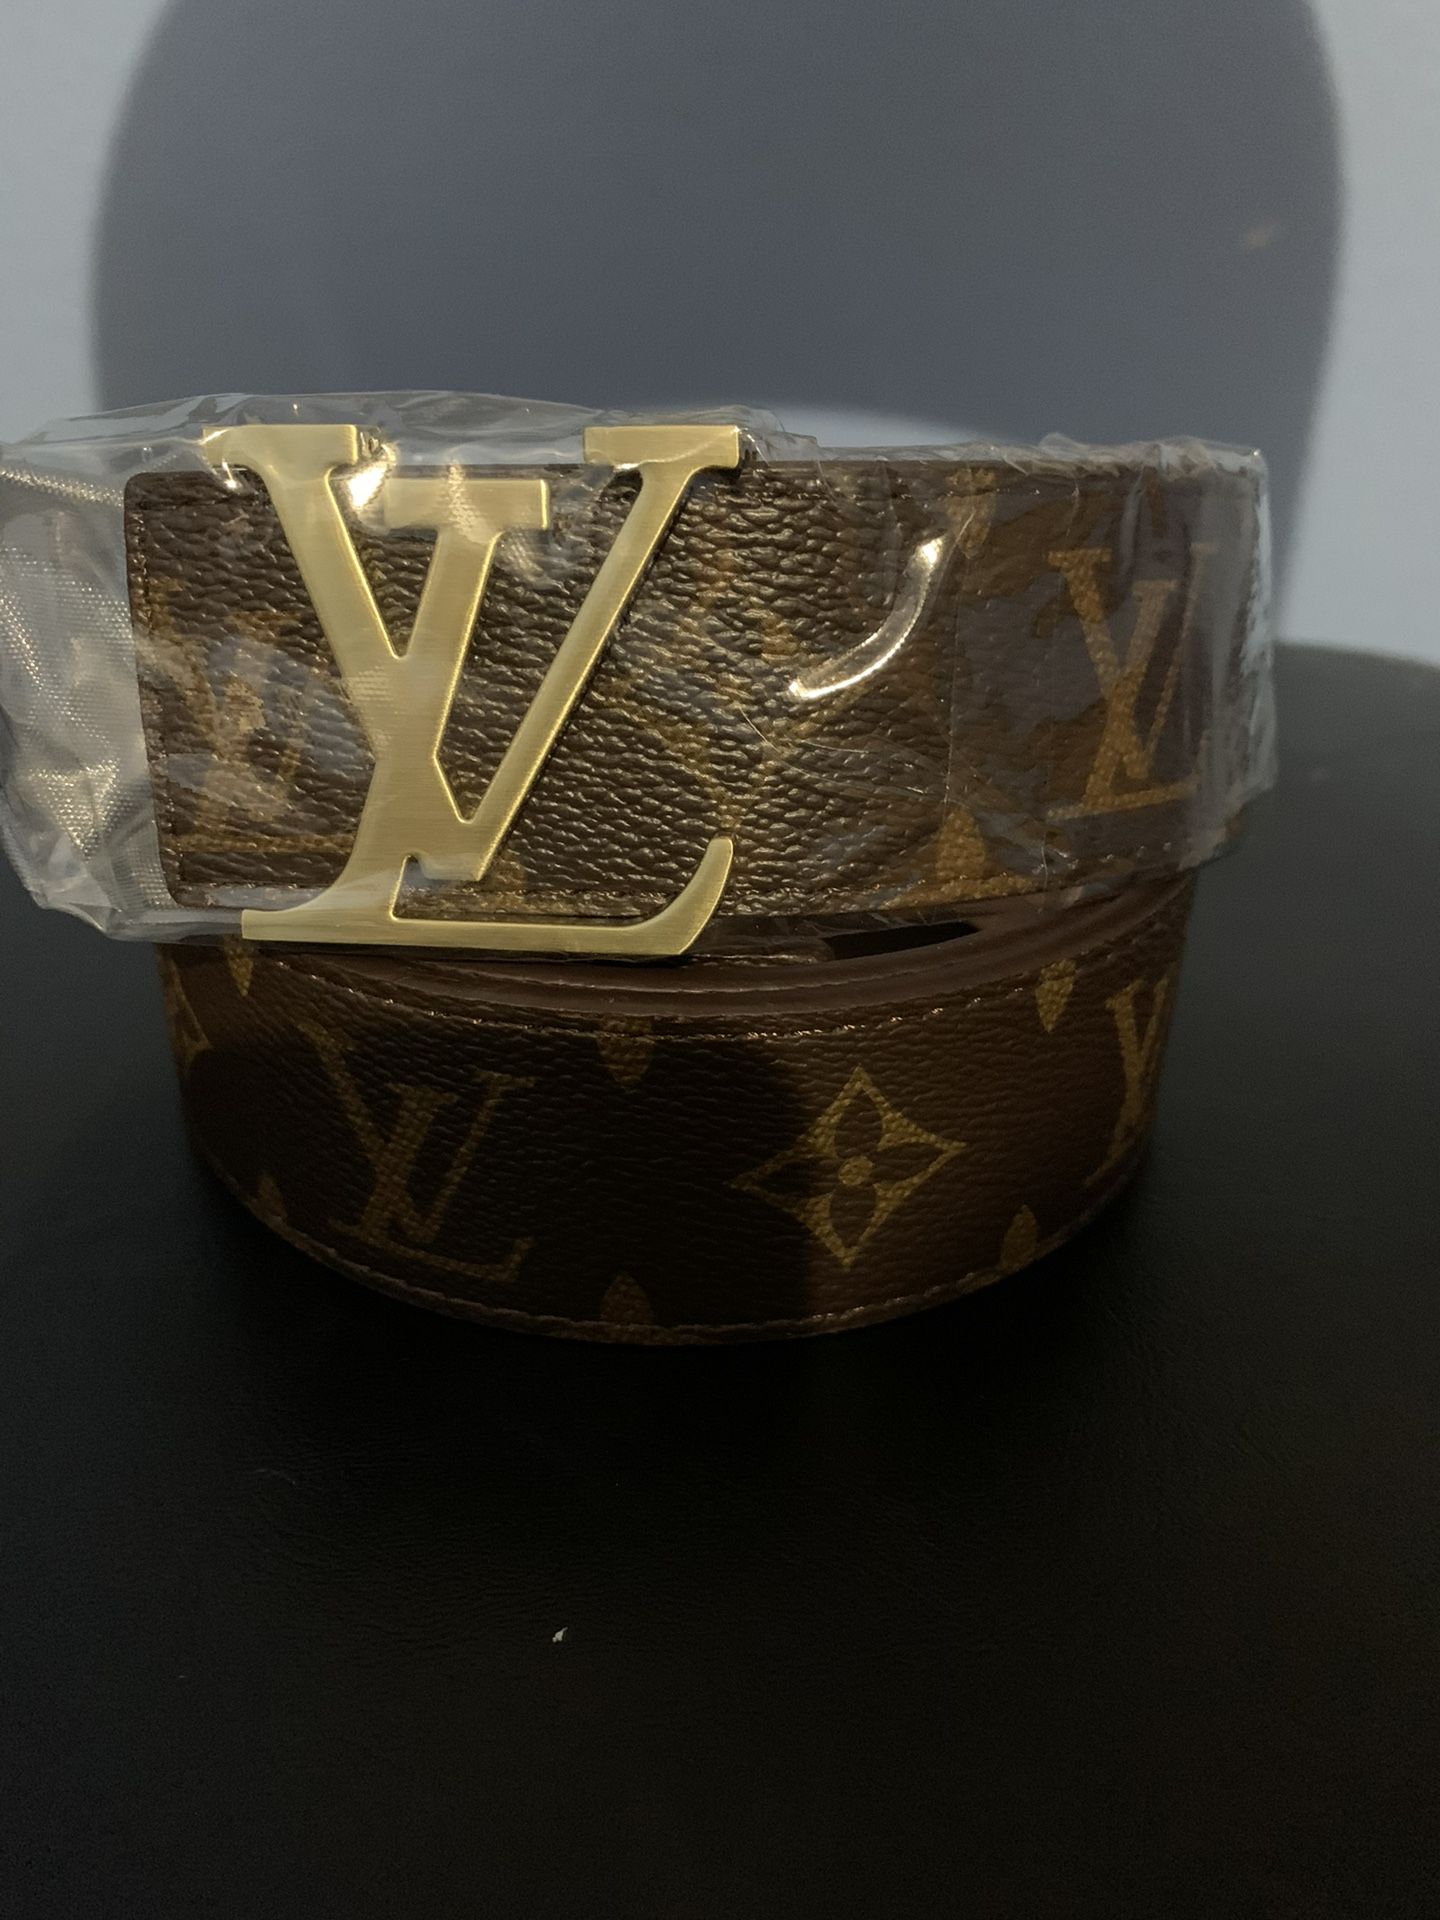 LV Belt - Brand New